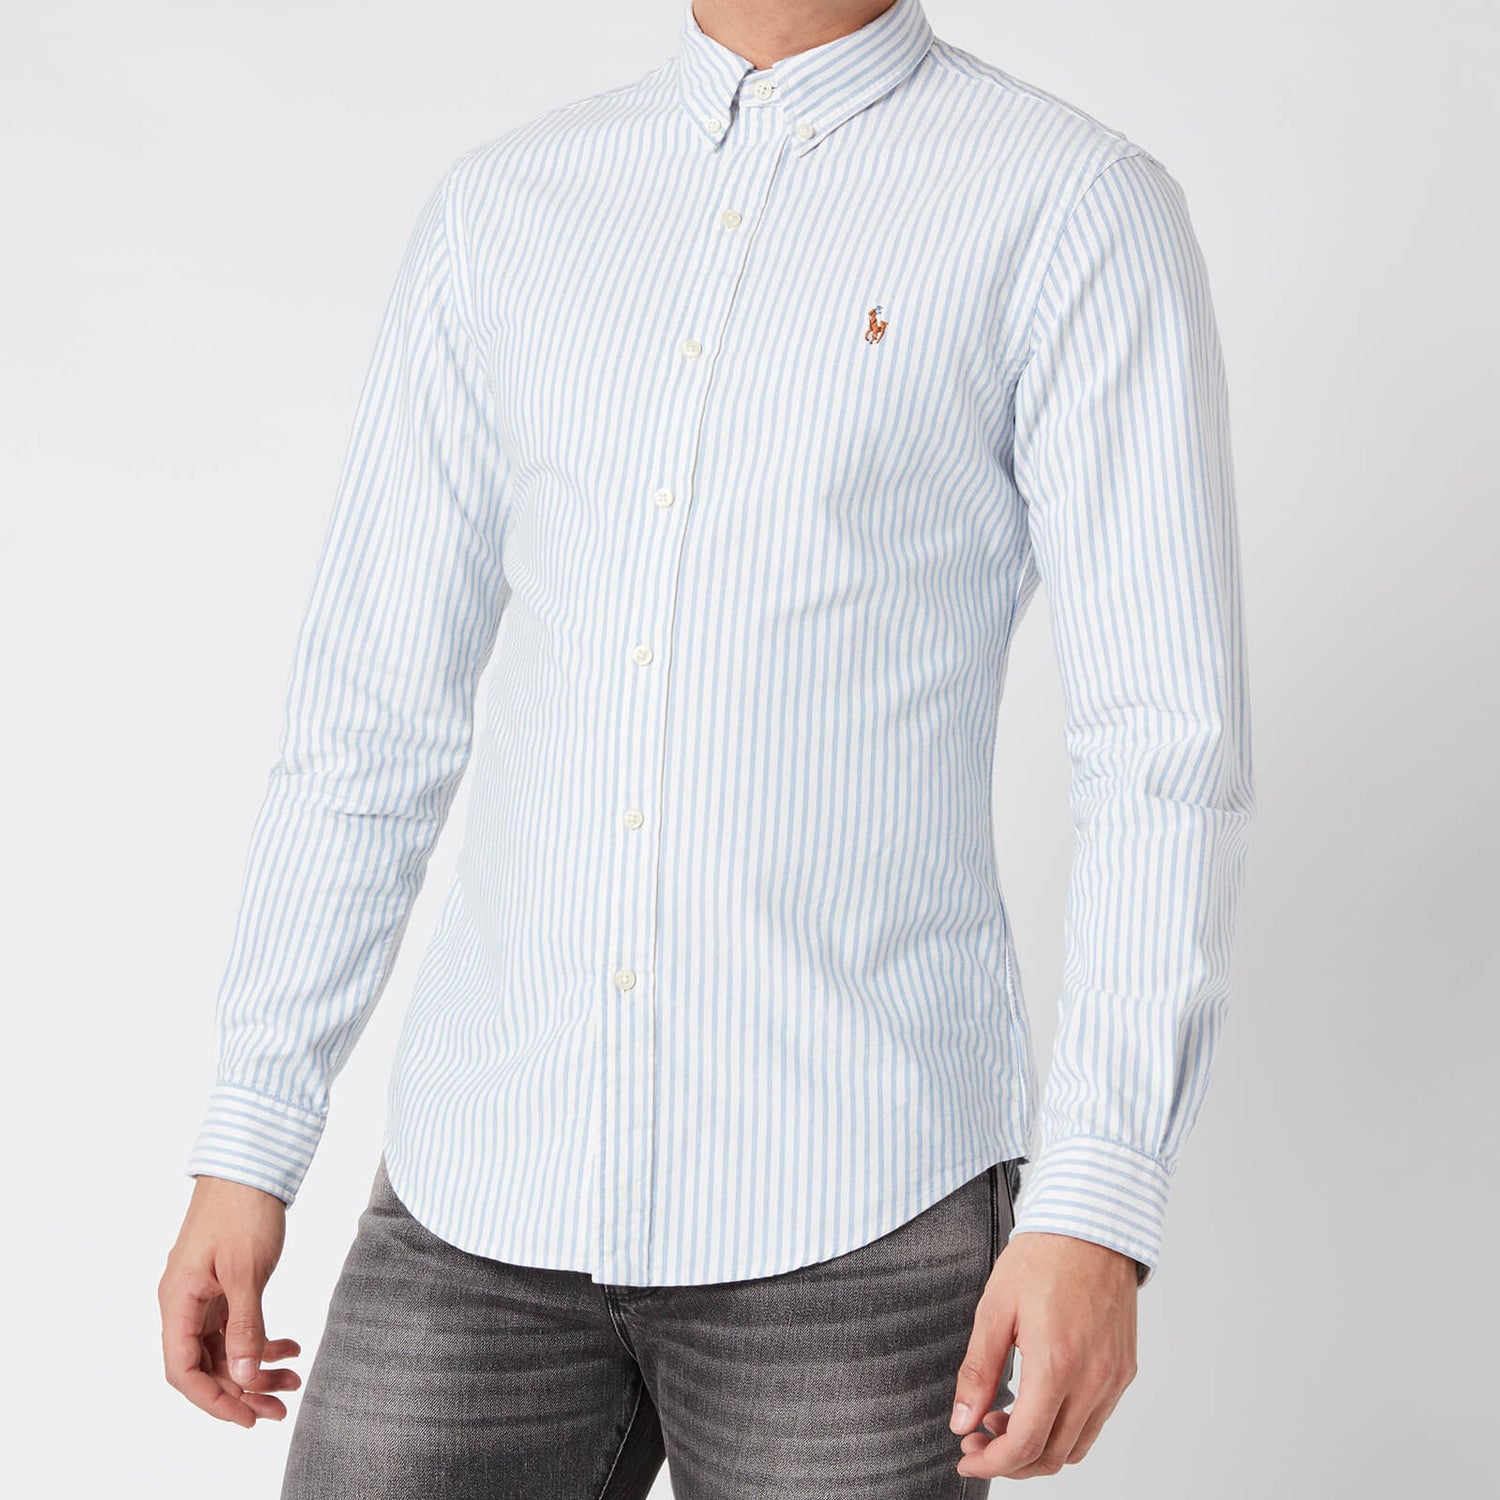 Polo Ralph Lauren Men's Slim Fit Oxford Shirt - Blue/White